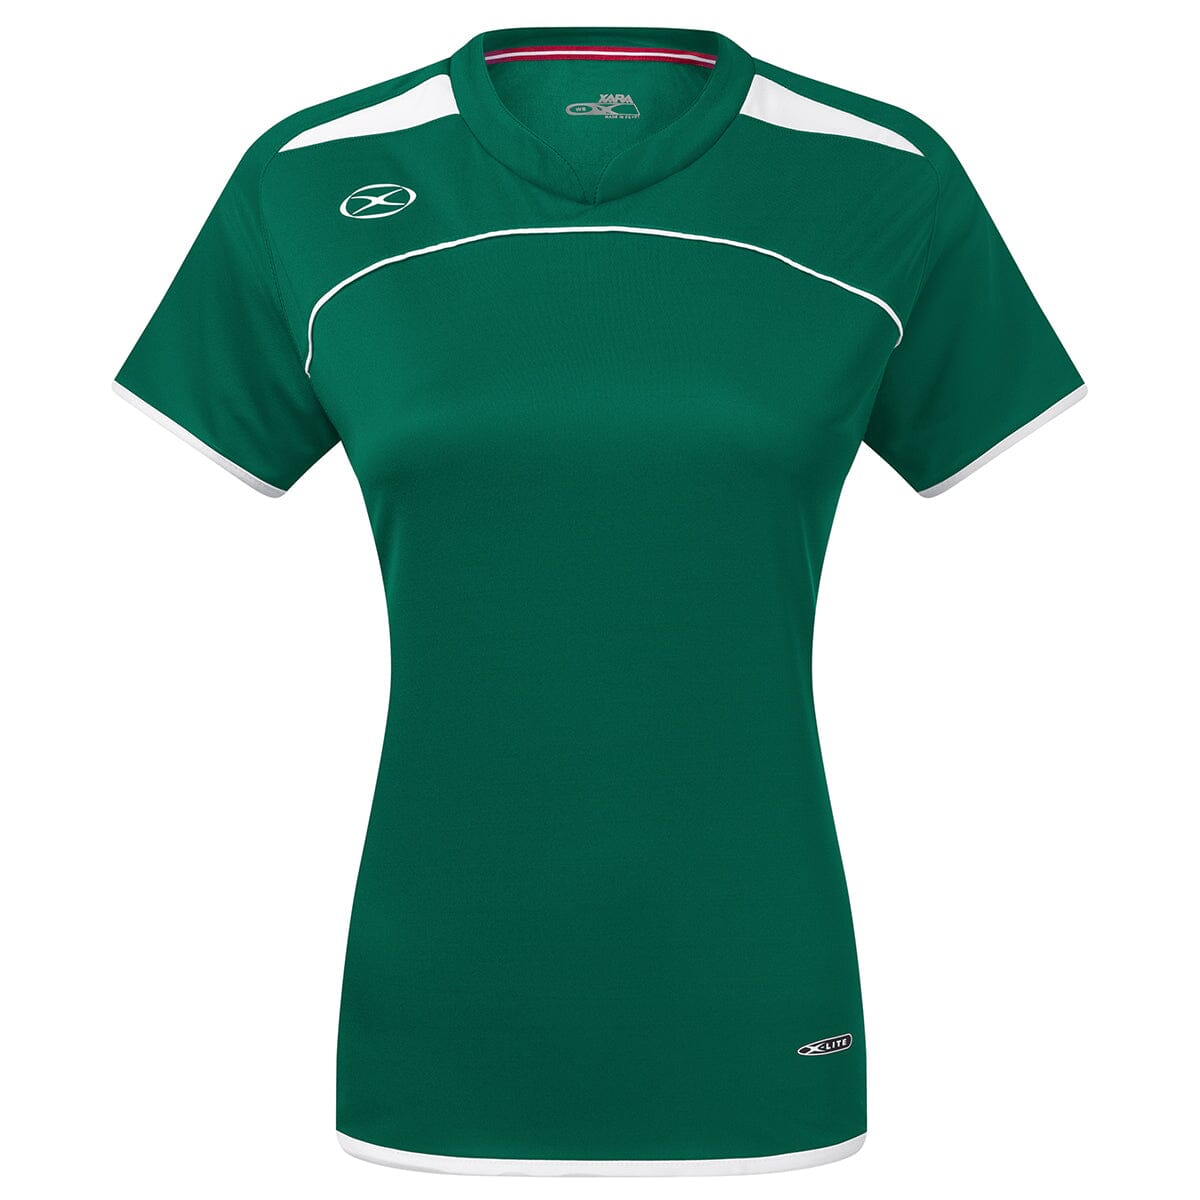 Cardiff Jersey - Female Shirt Xara Soccer Hunter/White Womens Youth Large 